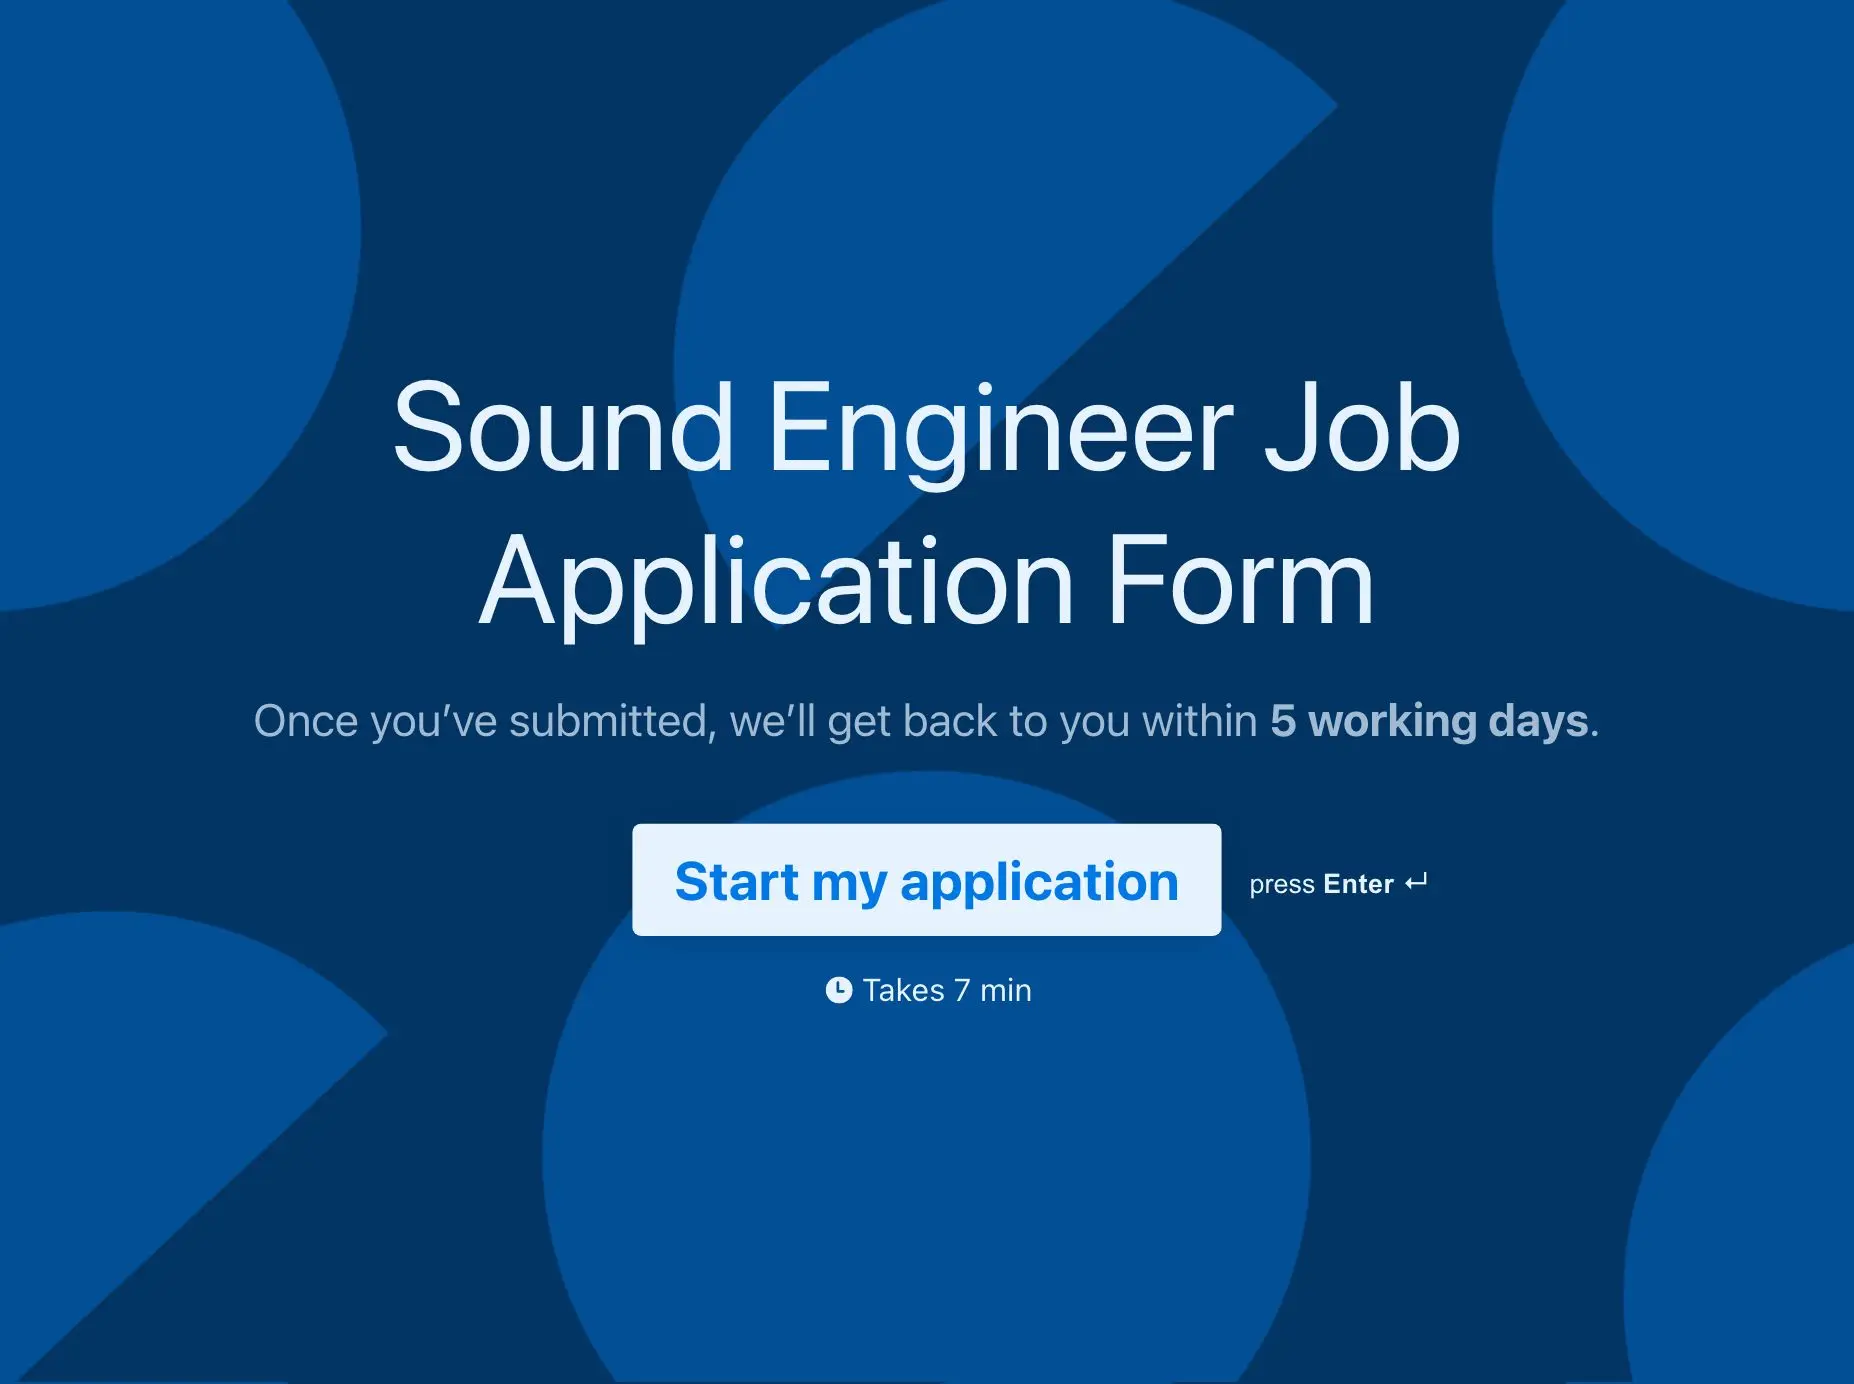 Sound Engineer Job Application Form Template Hero